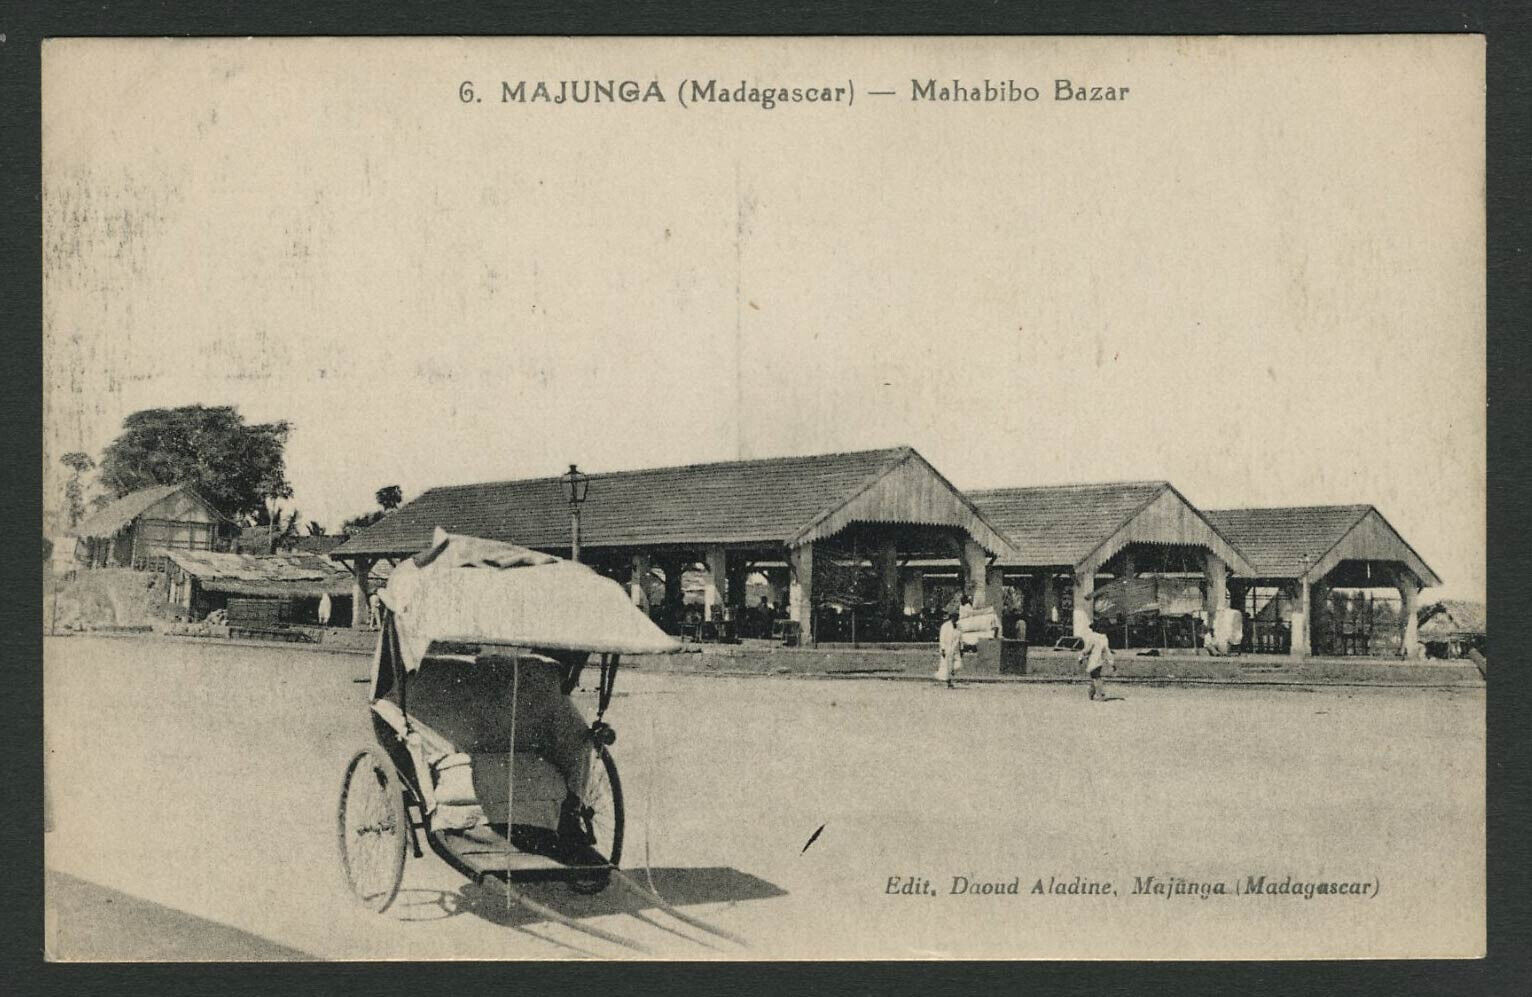 Majunga Mahajanga Madagascar: 1910s Postcard MAHABIBO BAZAR BAZAAR Marketplace